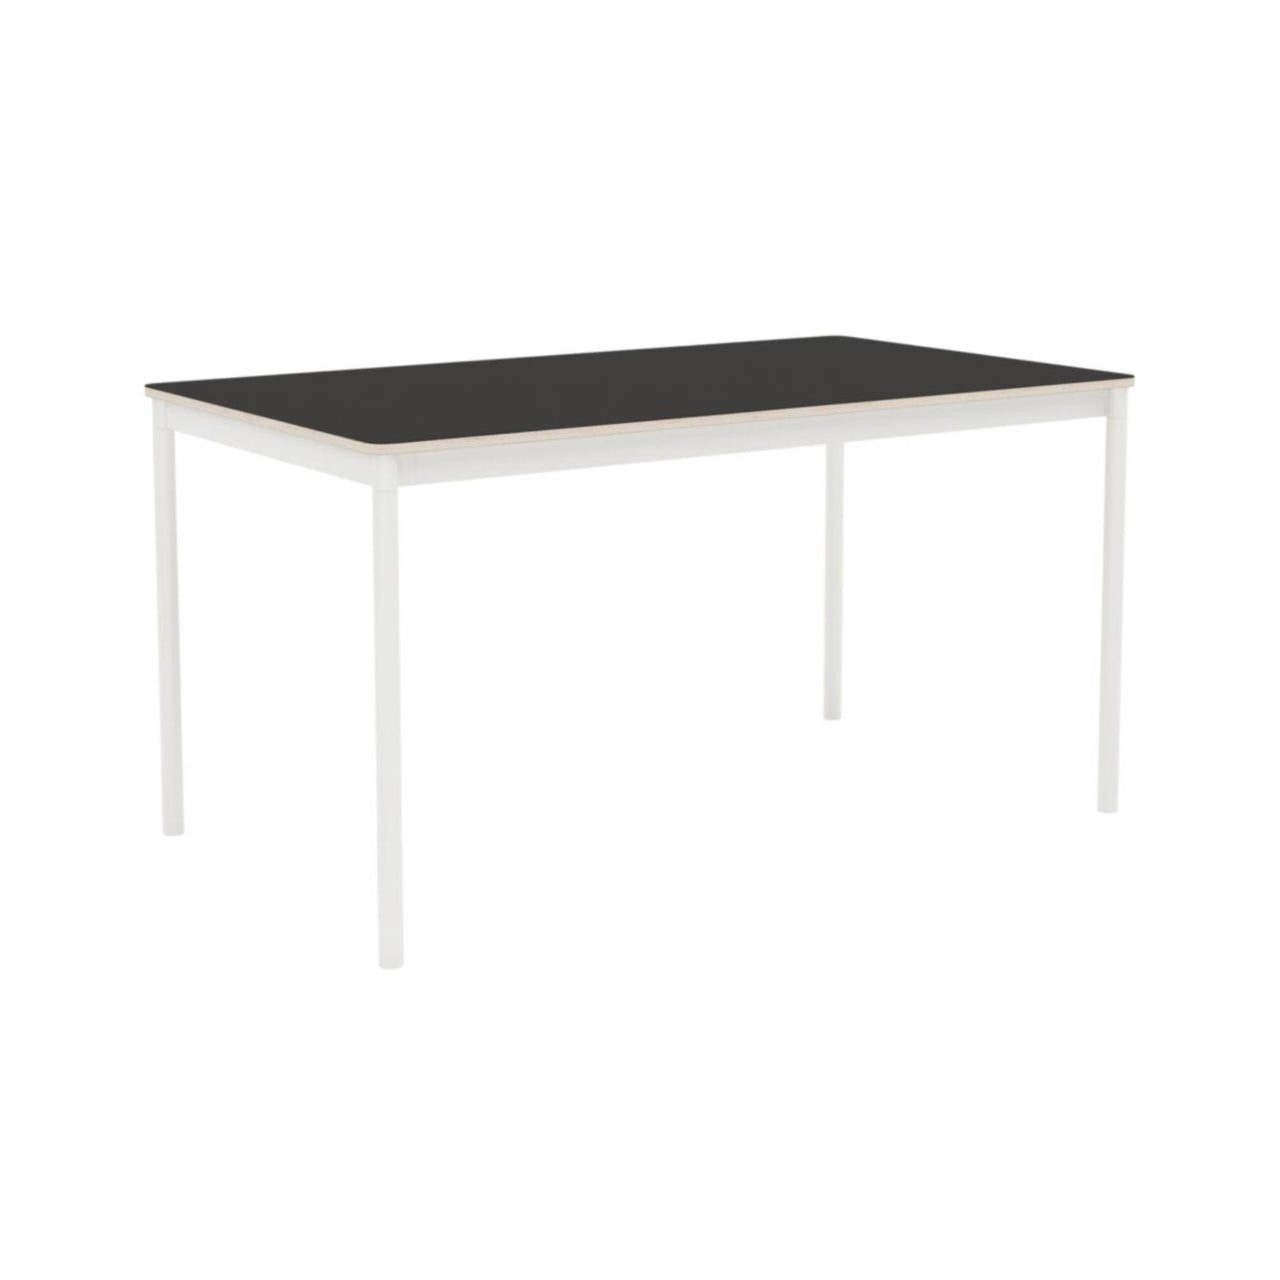 Base Table: Small + Black Linoleum + Plywood Edge + White